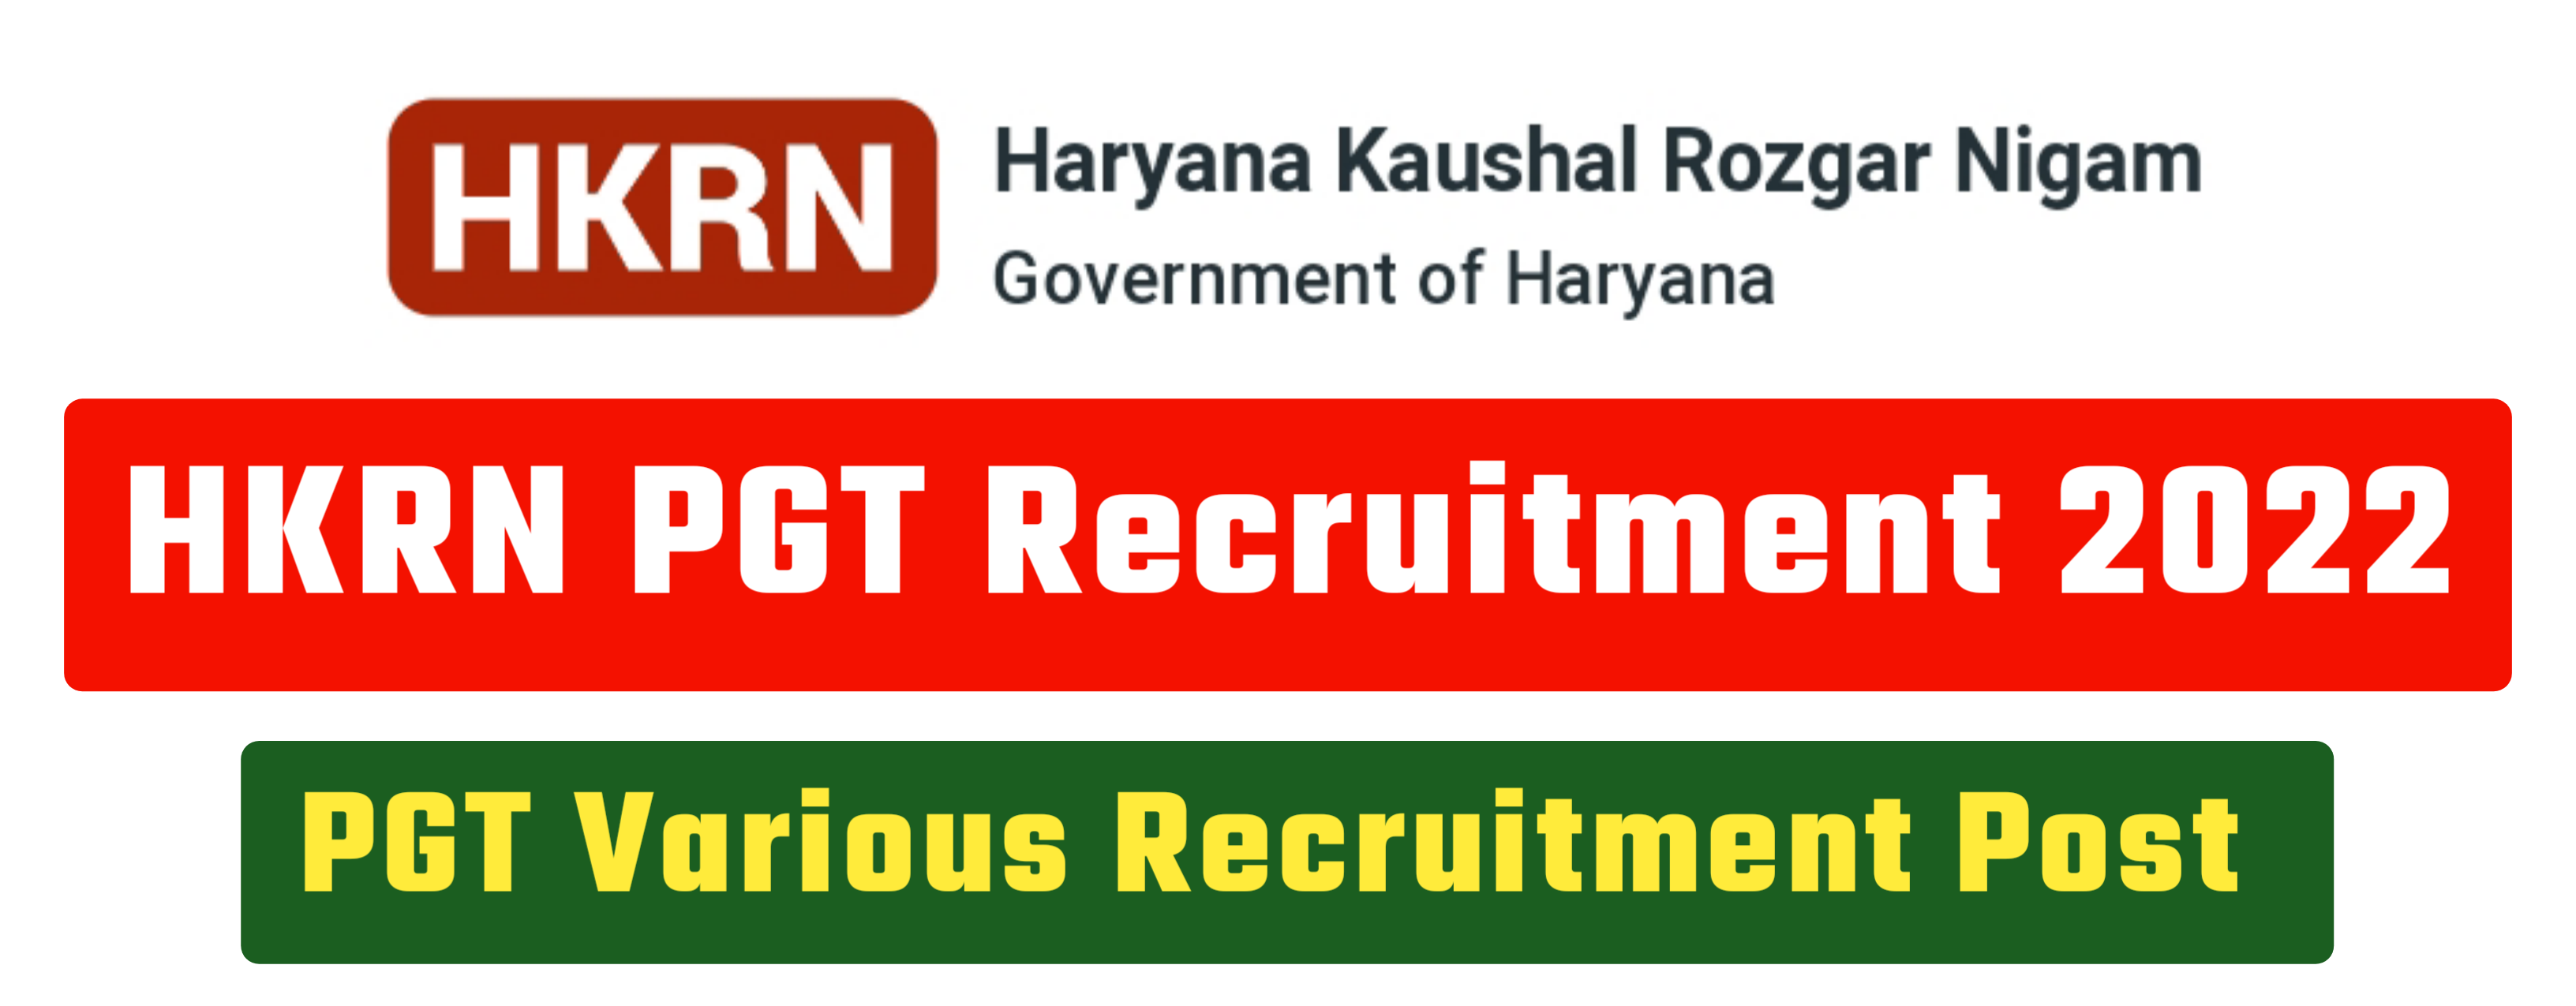 HKRN PGT Recruitment 2022